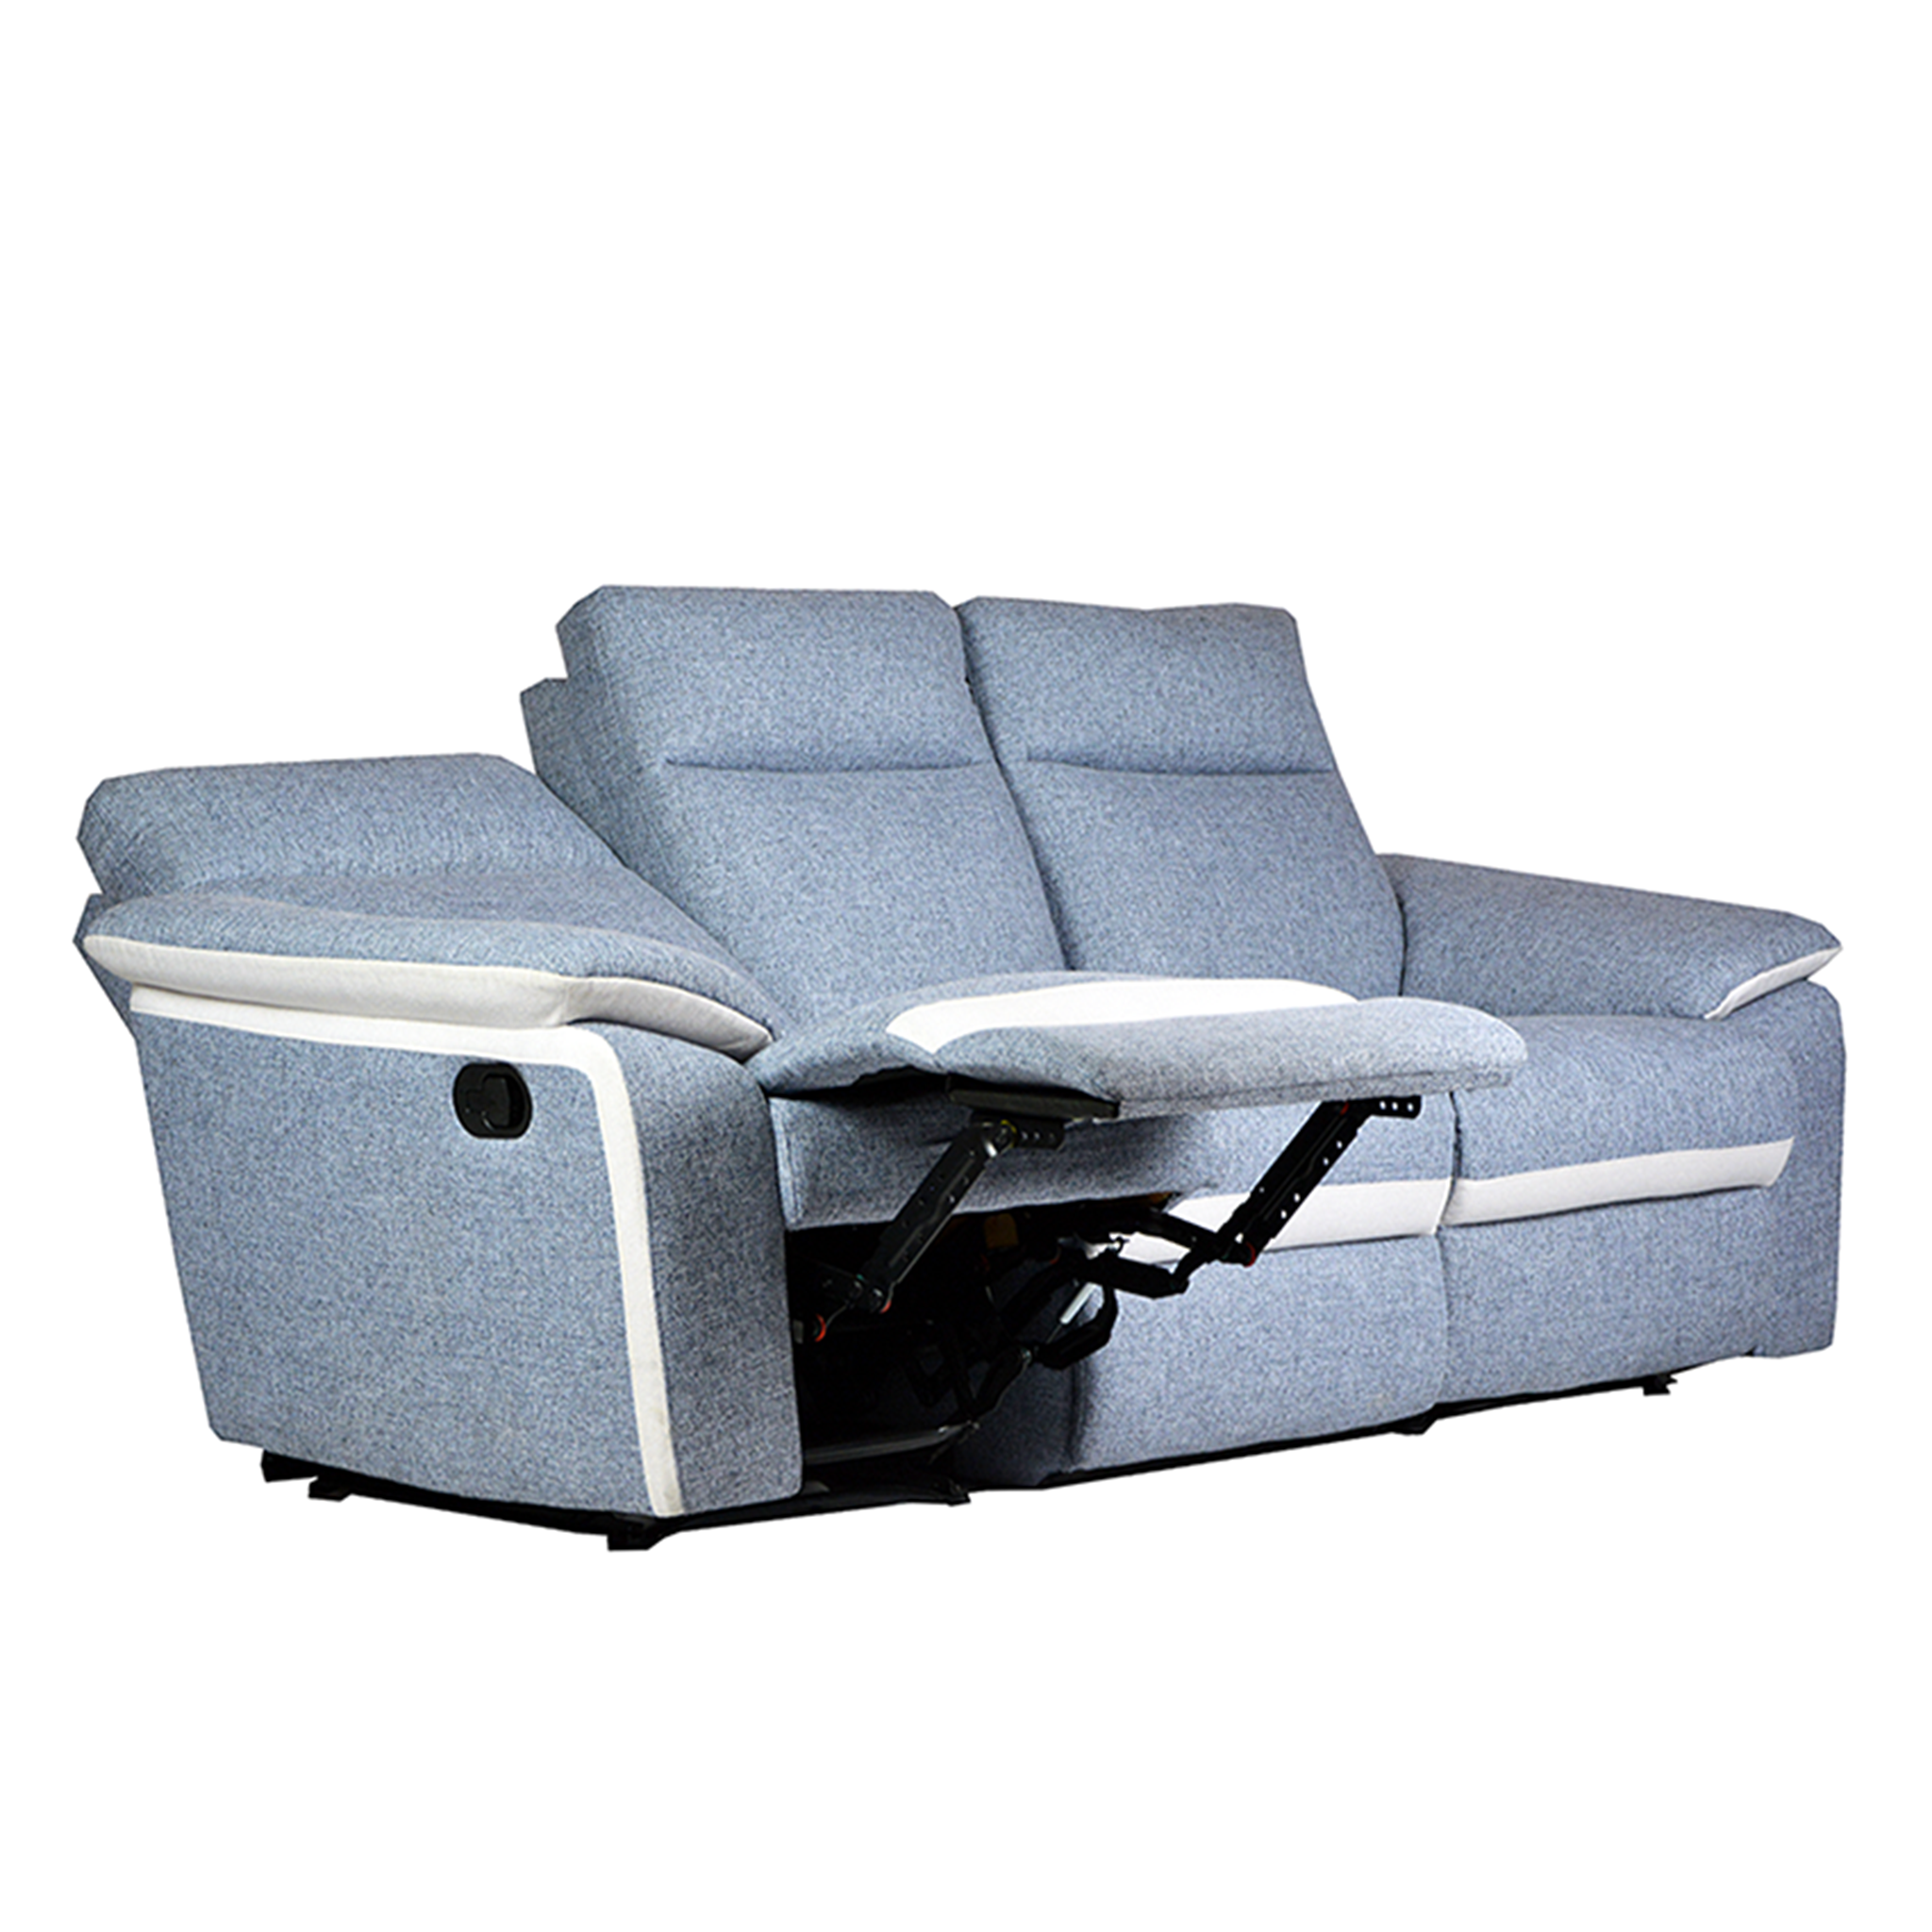 Issac 3 Seater Recliner Sofa Fabric